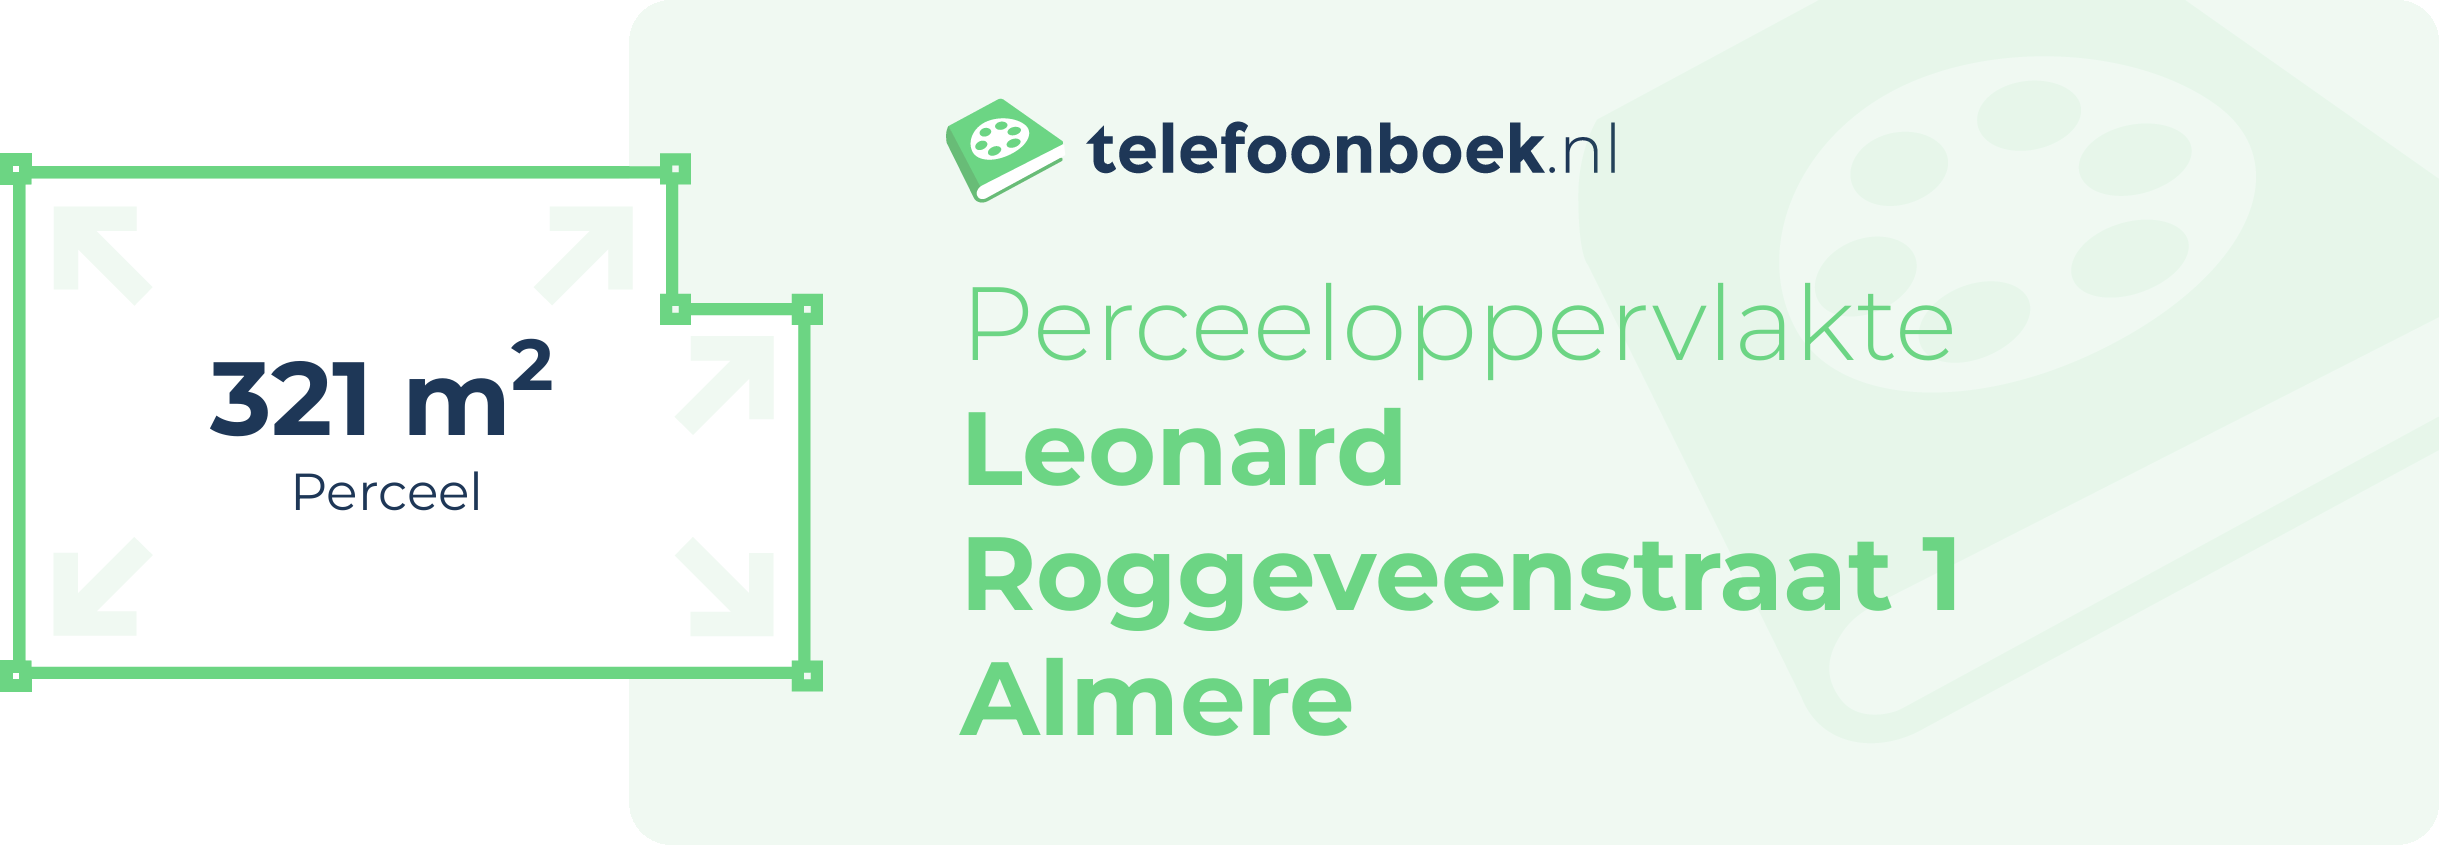 Perceeloppervlakte Leonard Roggeveenstraat 1 Almere